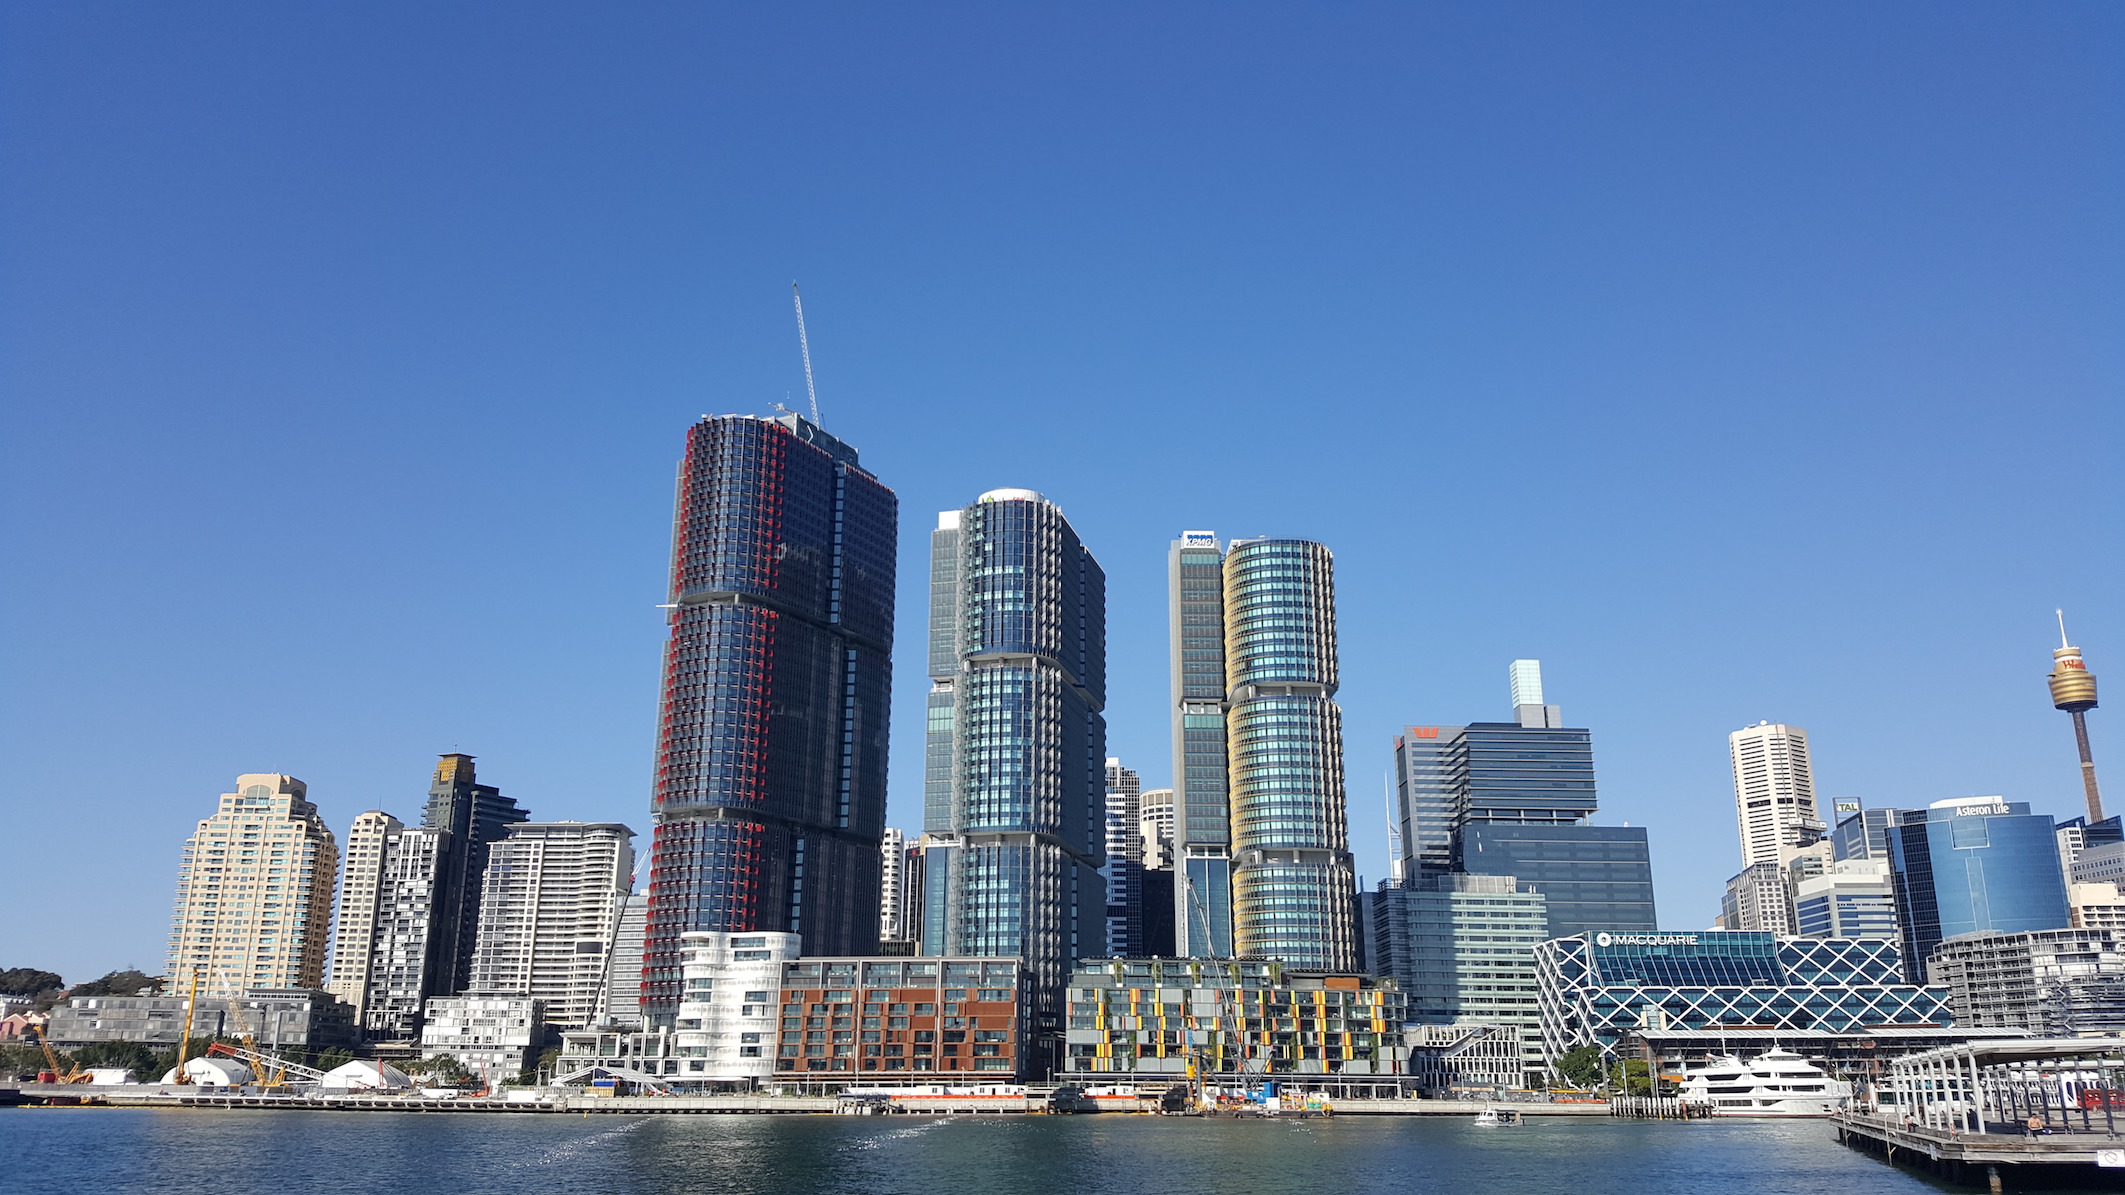 View across Sydney's city skyline from Pyrmont